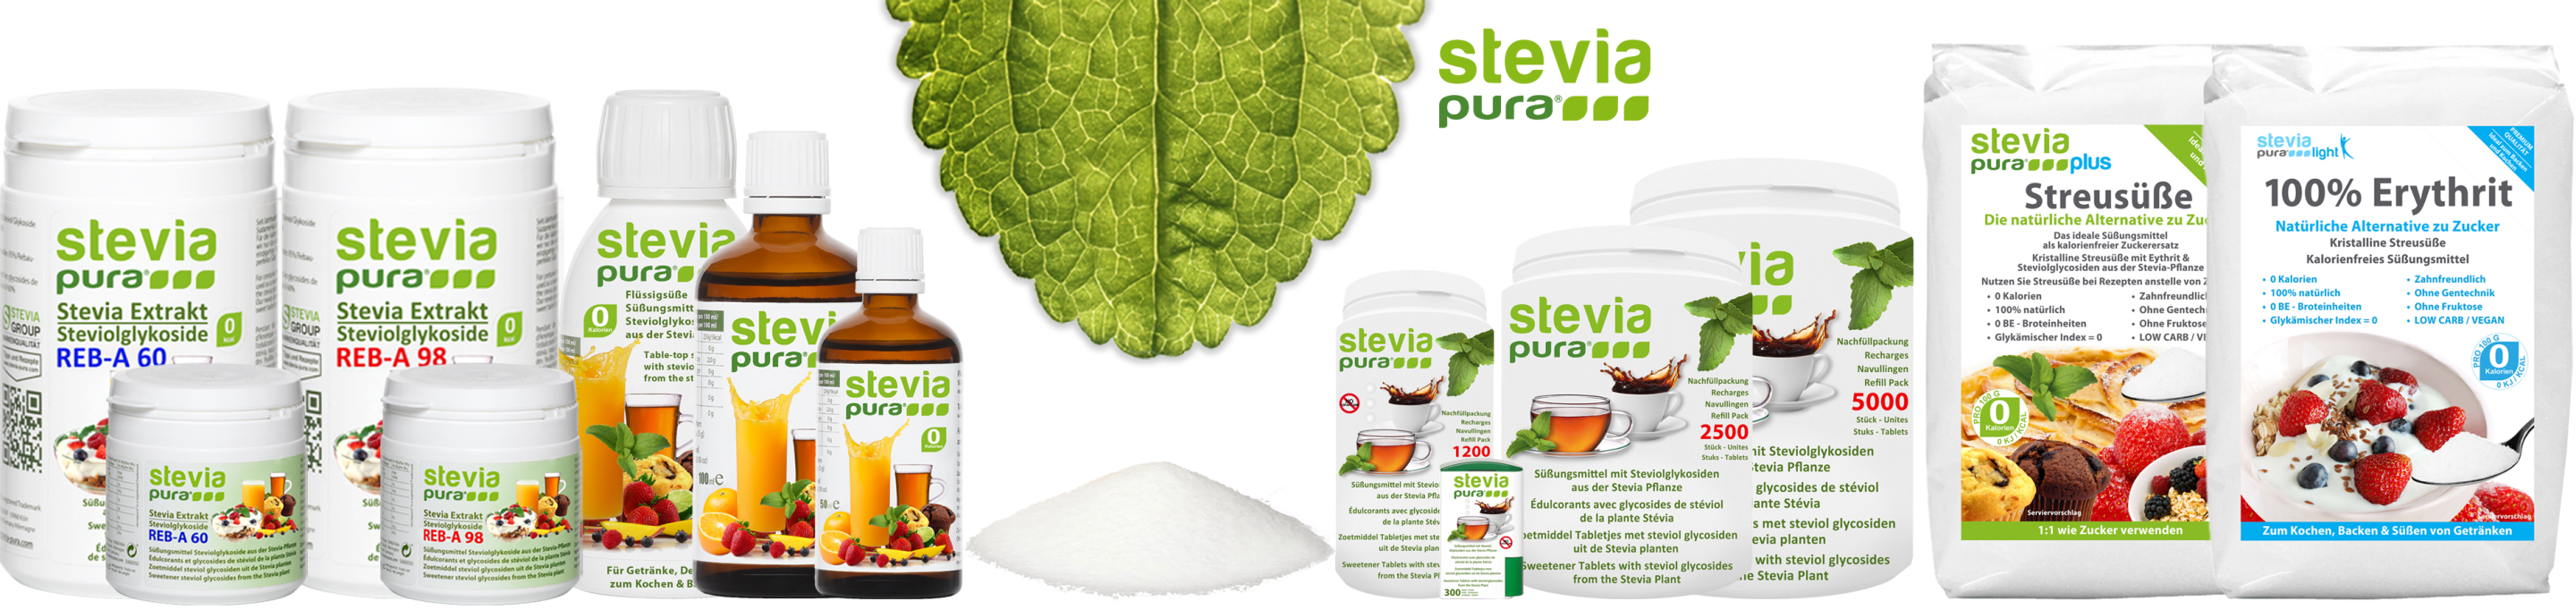 steviapura - The brand for high-quality stevia sweeteners 